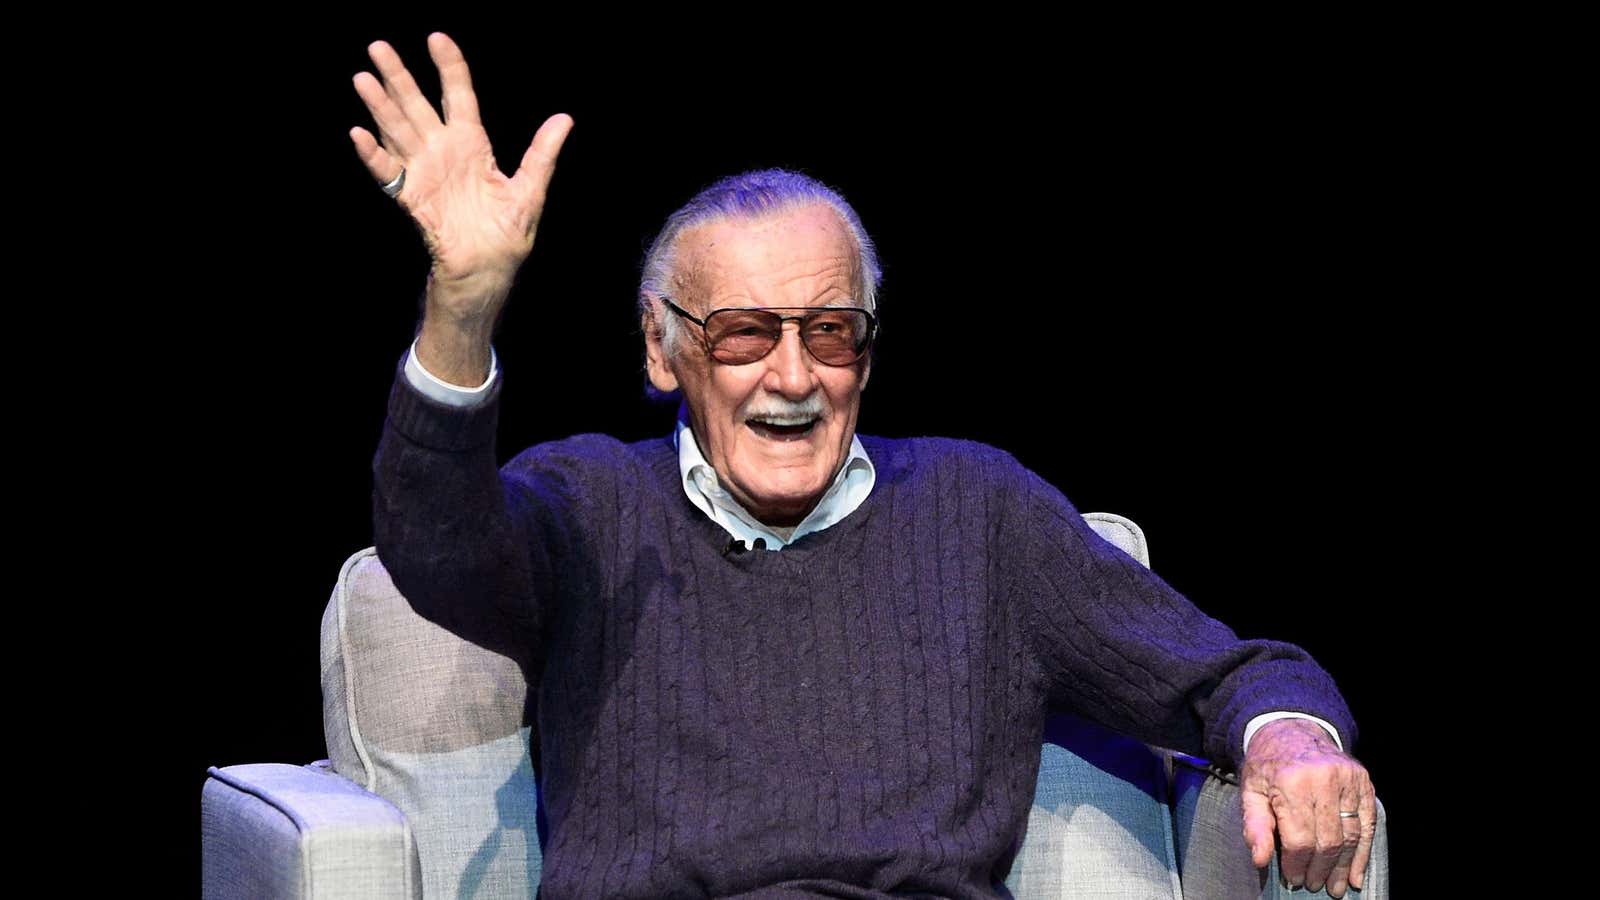 Rest in peace, Stan Lee.